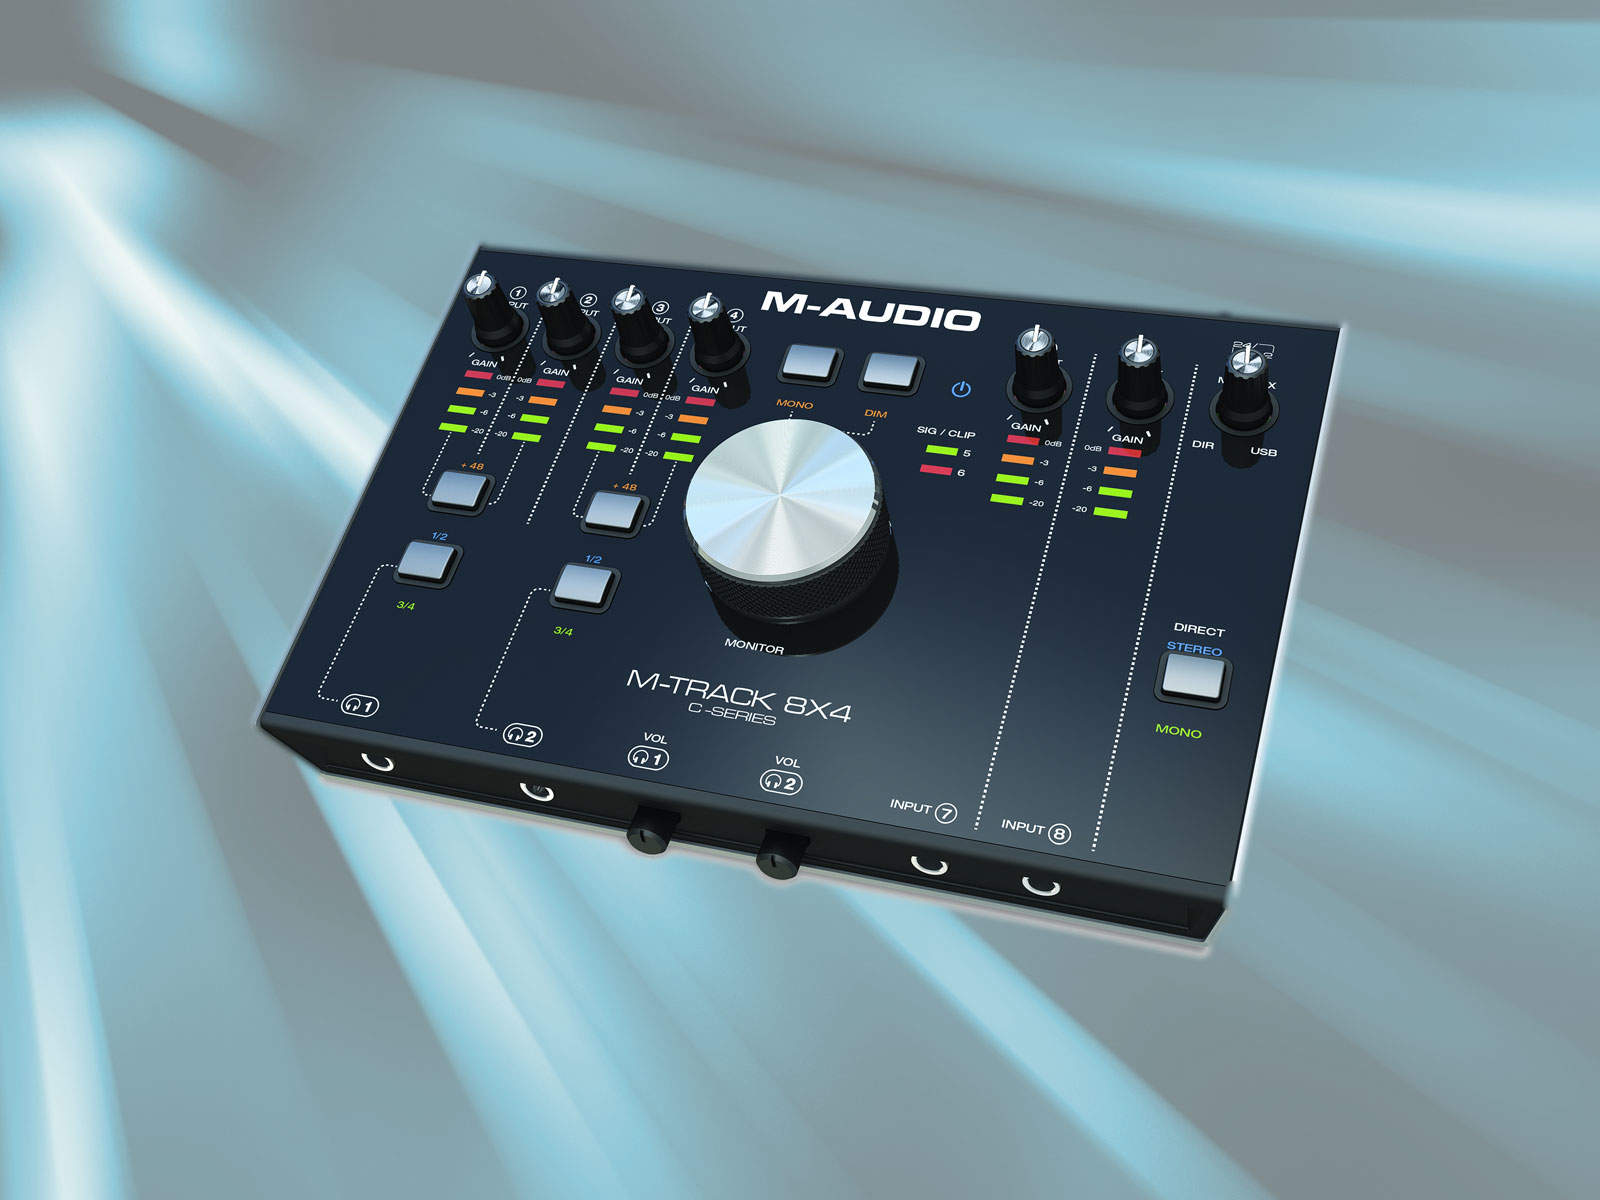 New M-Audio M-Track Audio Interfaces Announced at NAMM